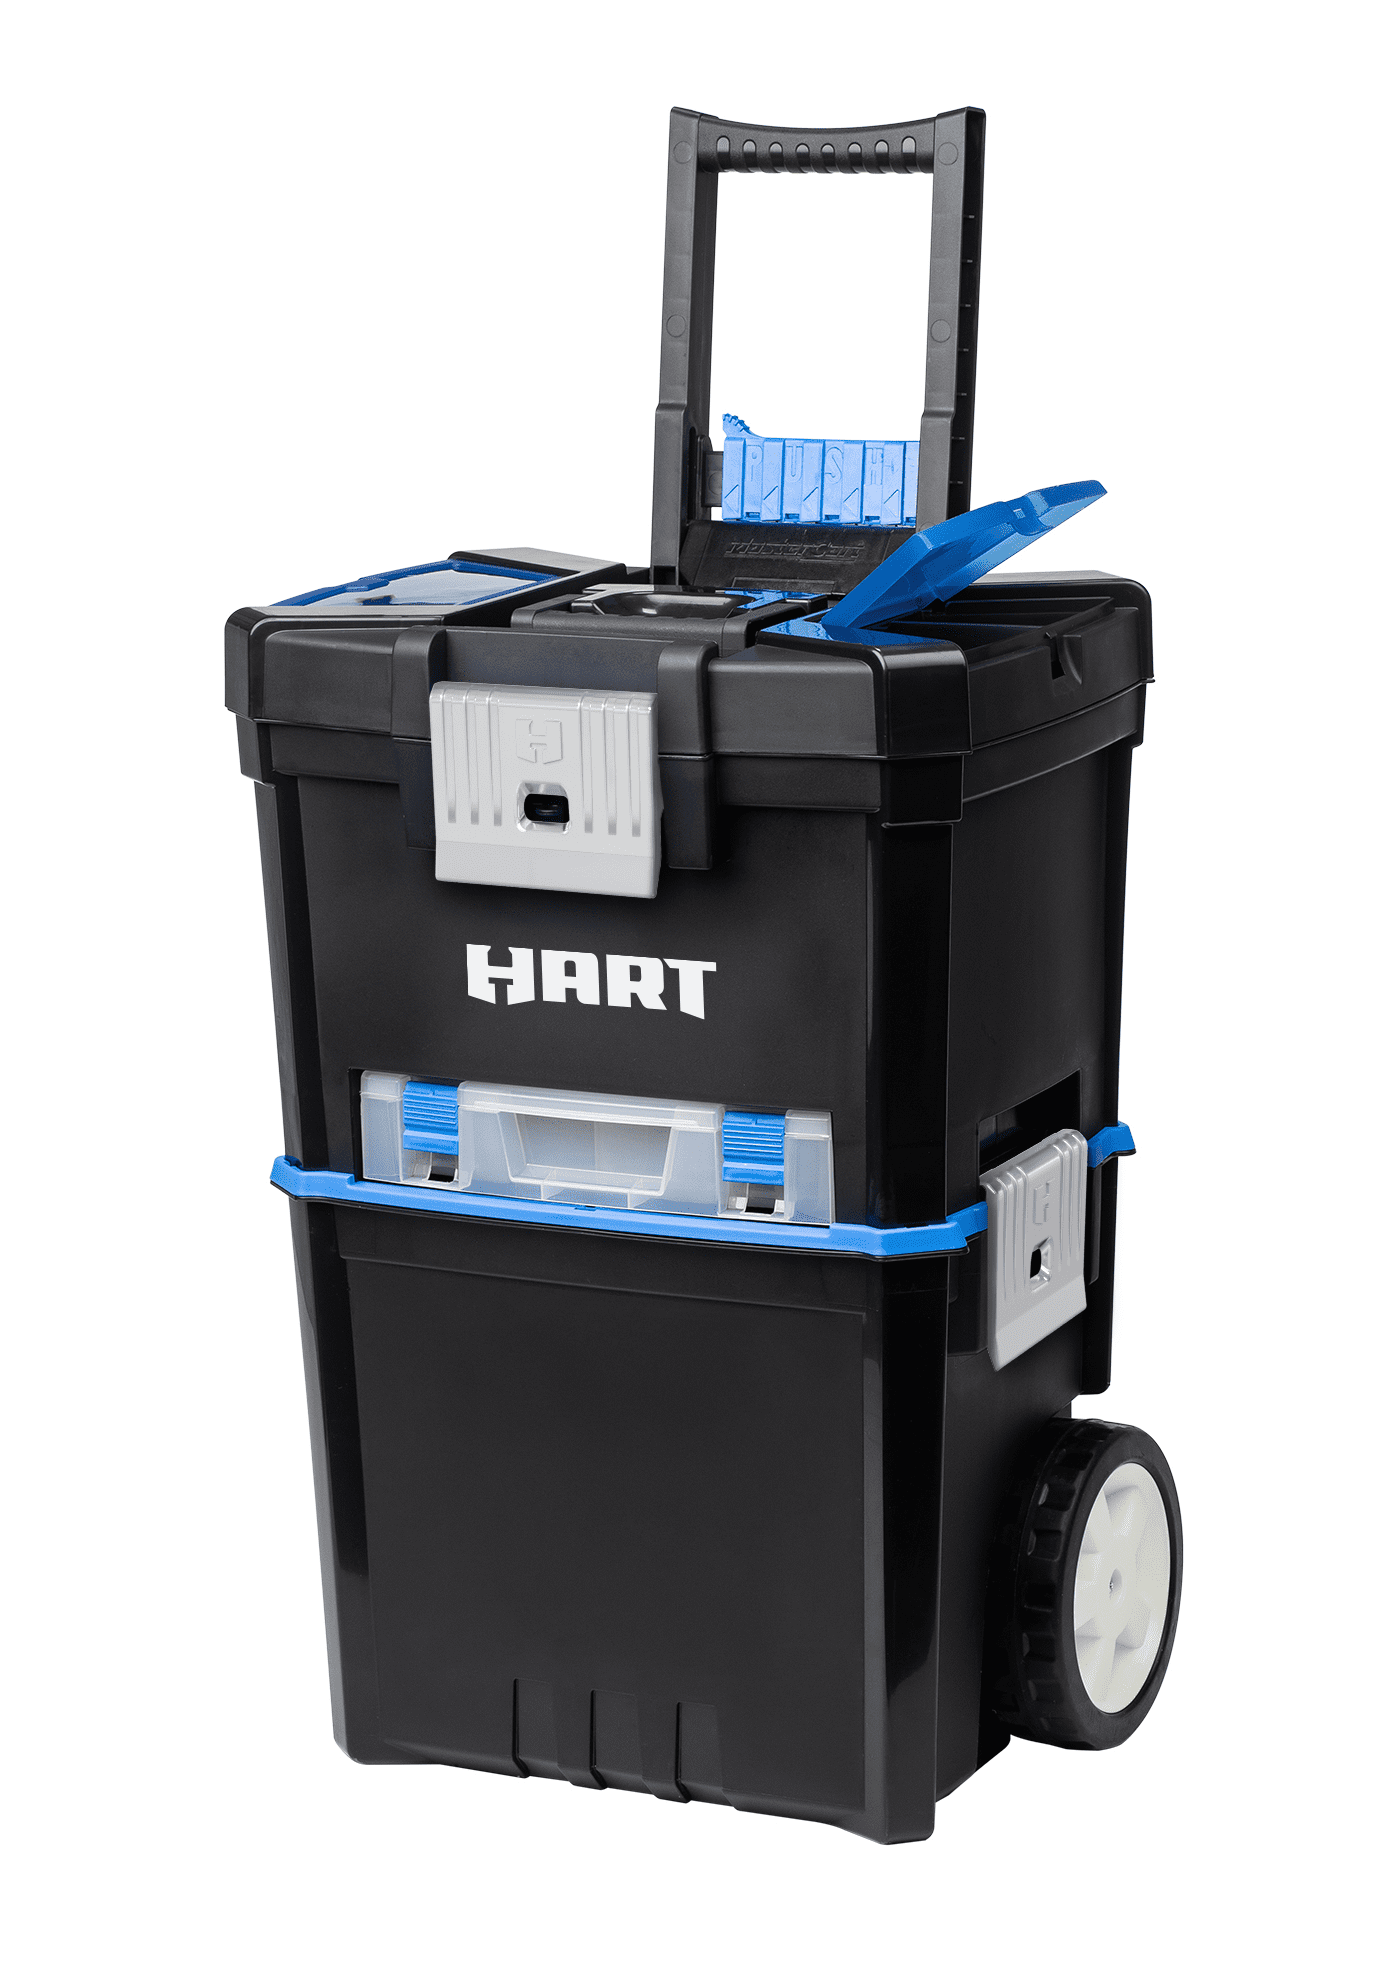 Hart 3 In 1 16 Inch Rolling Plastic Tool Box Black And Blue Walmart Com